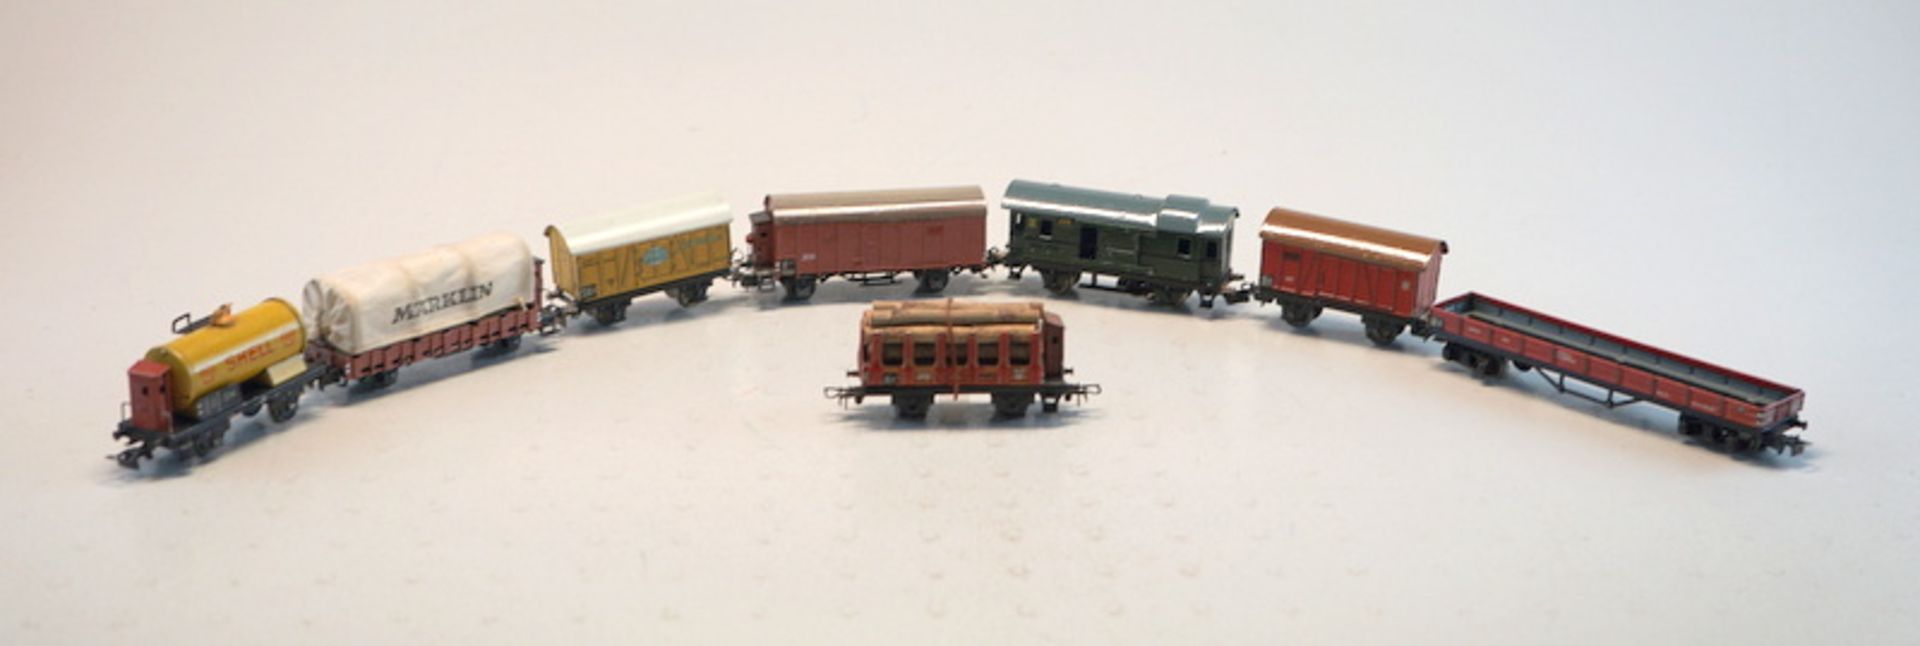 Märklin 1929ff, Gebr. Märklin & Cie., G.m.b.H. Göppingen: Sammlung von 8 historischen Güterwagen, Sp - Image 2 of 3